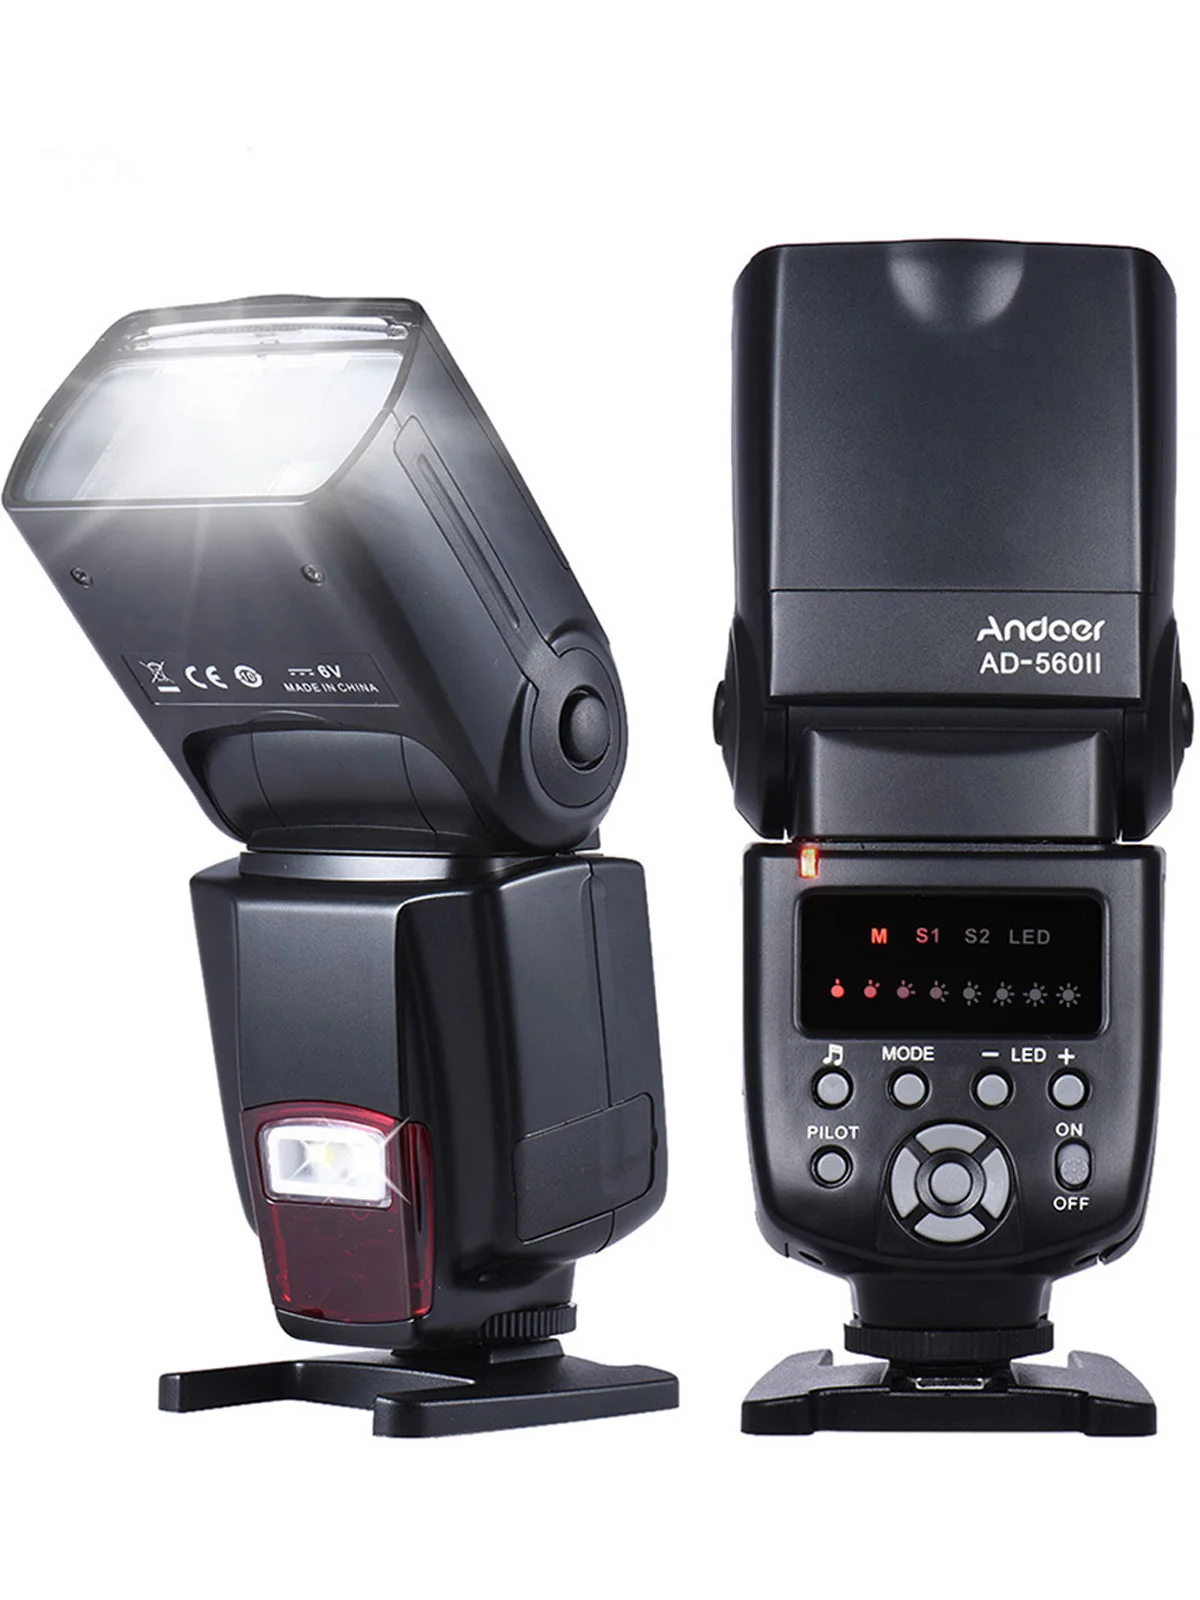 Andoer AD-560II Pro flash Camera dslr Flash Speedlite speed light for Canon Nikon Olympus Pentax DSLR Camera  flash studio